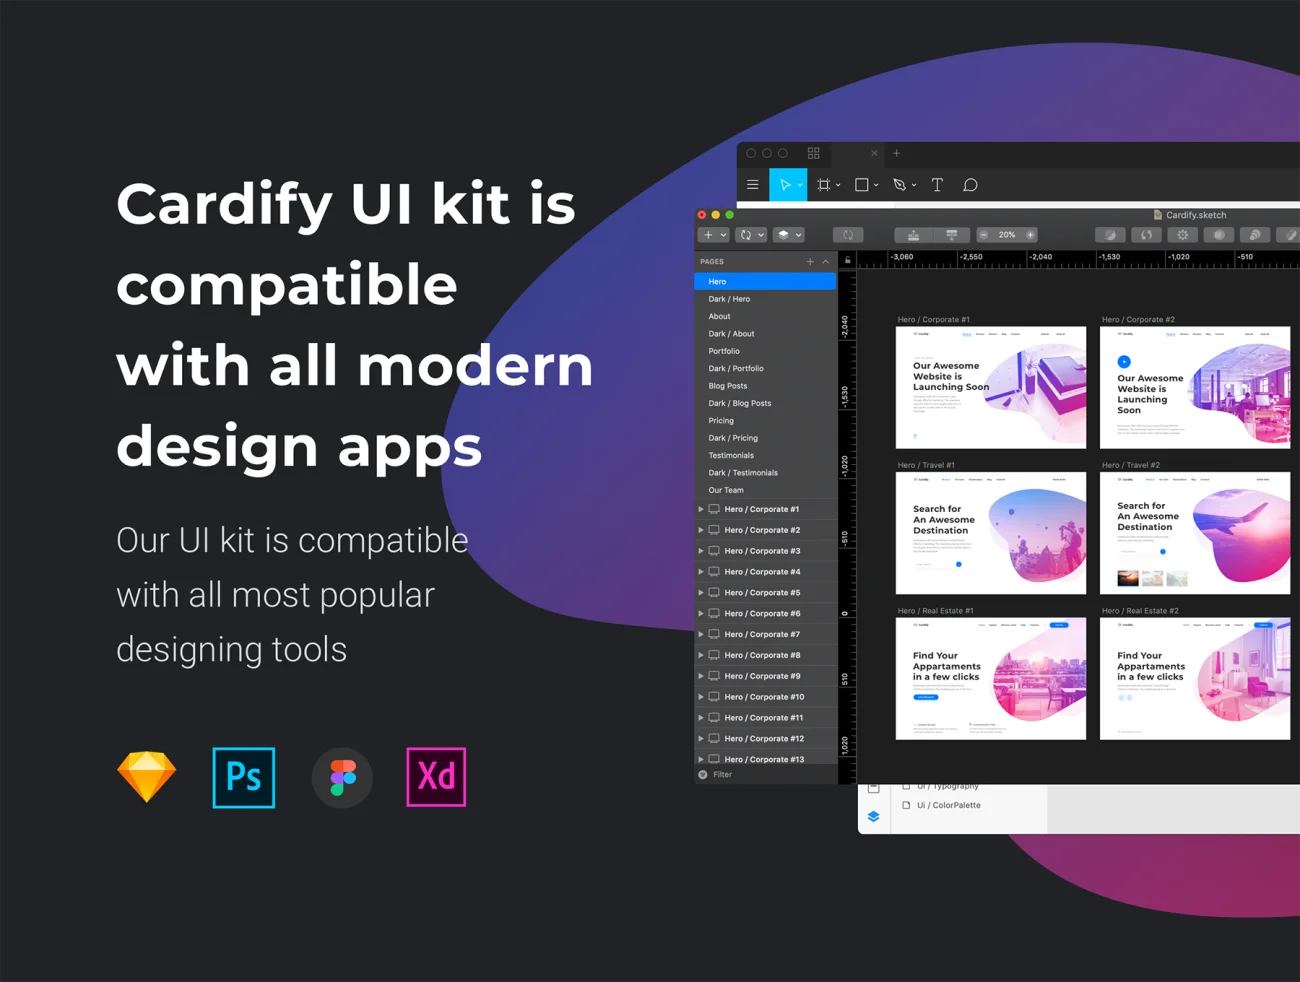 Cardify Startup UI Kit(psd) 启动UI套件psd-ui套件、主页、介绍、列表、卡片式、引导页、海报、社交、网站、表单-到位啦UI